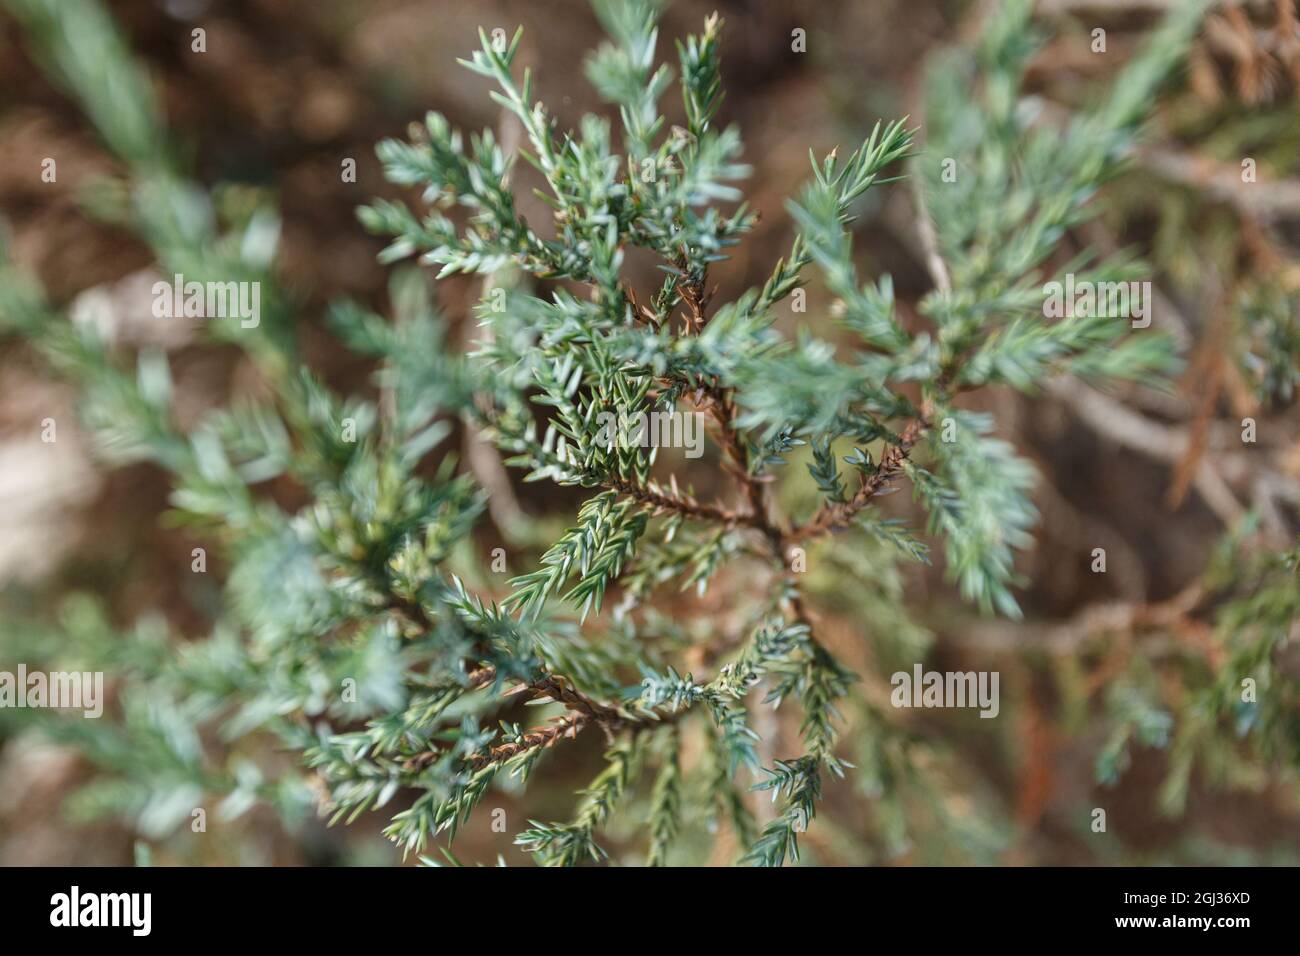 Juniper bush in the garden, close-up Stock Photo